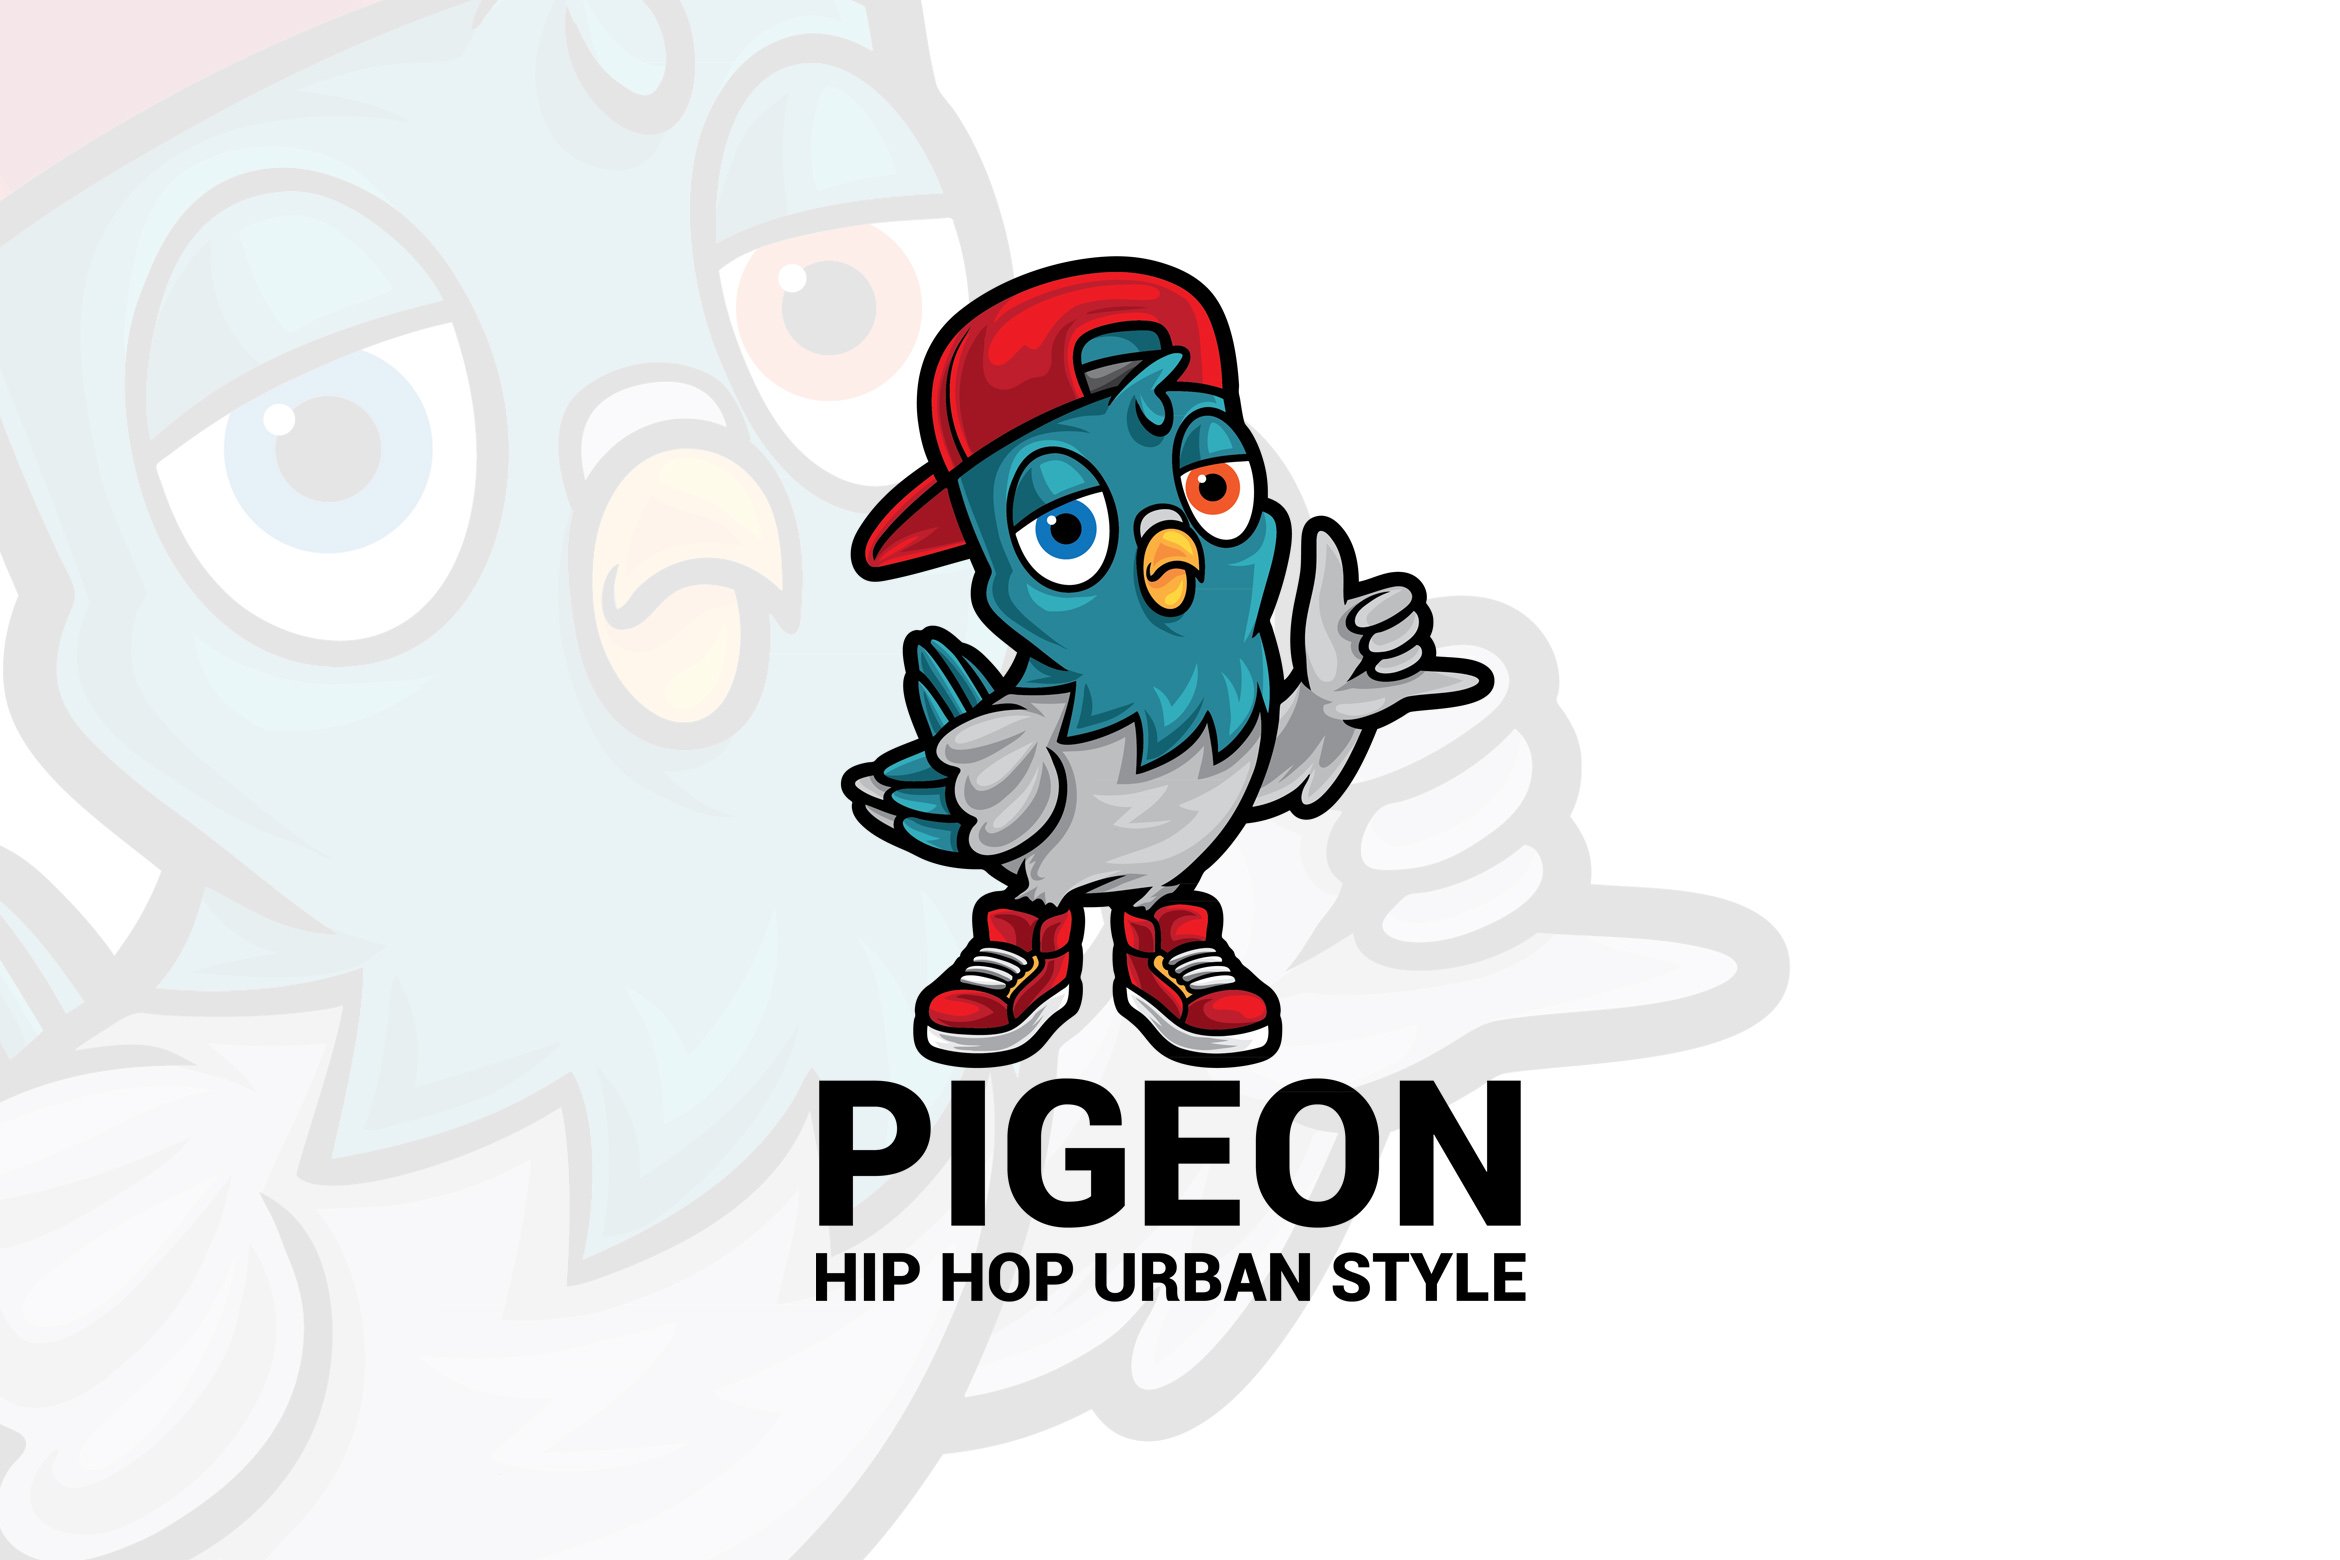 Pigeon Cartoon Mascot Logo cover image.